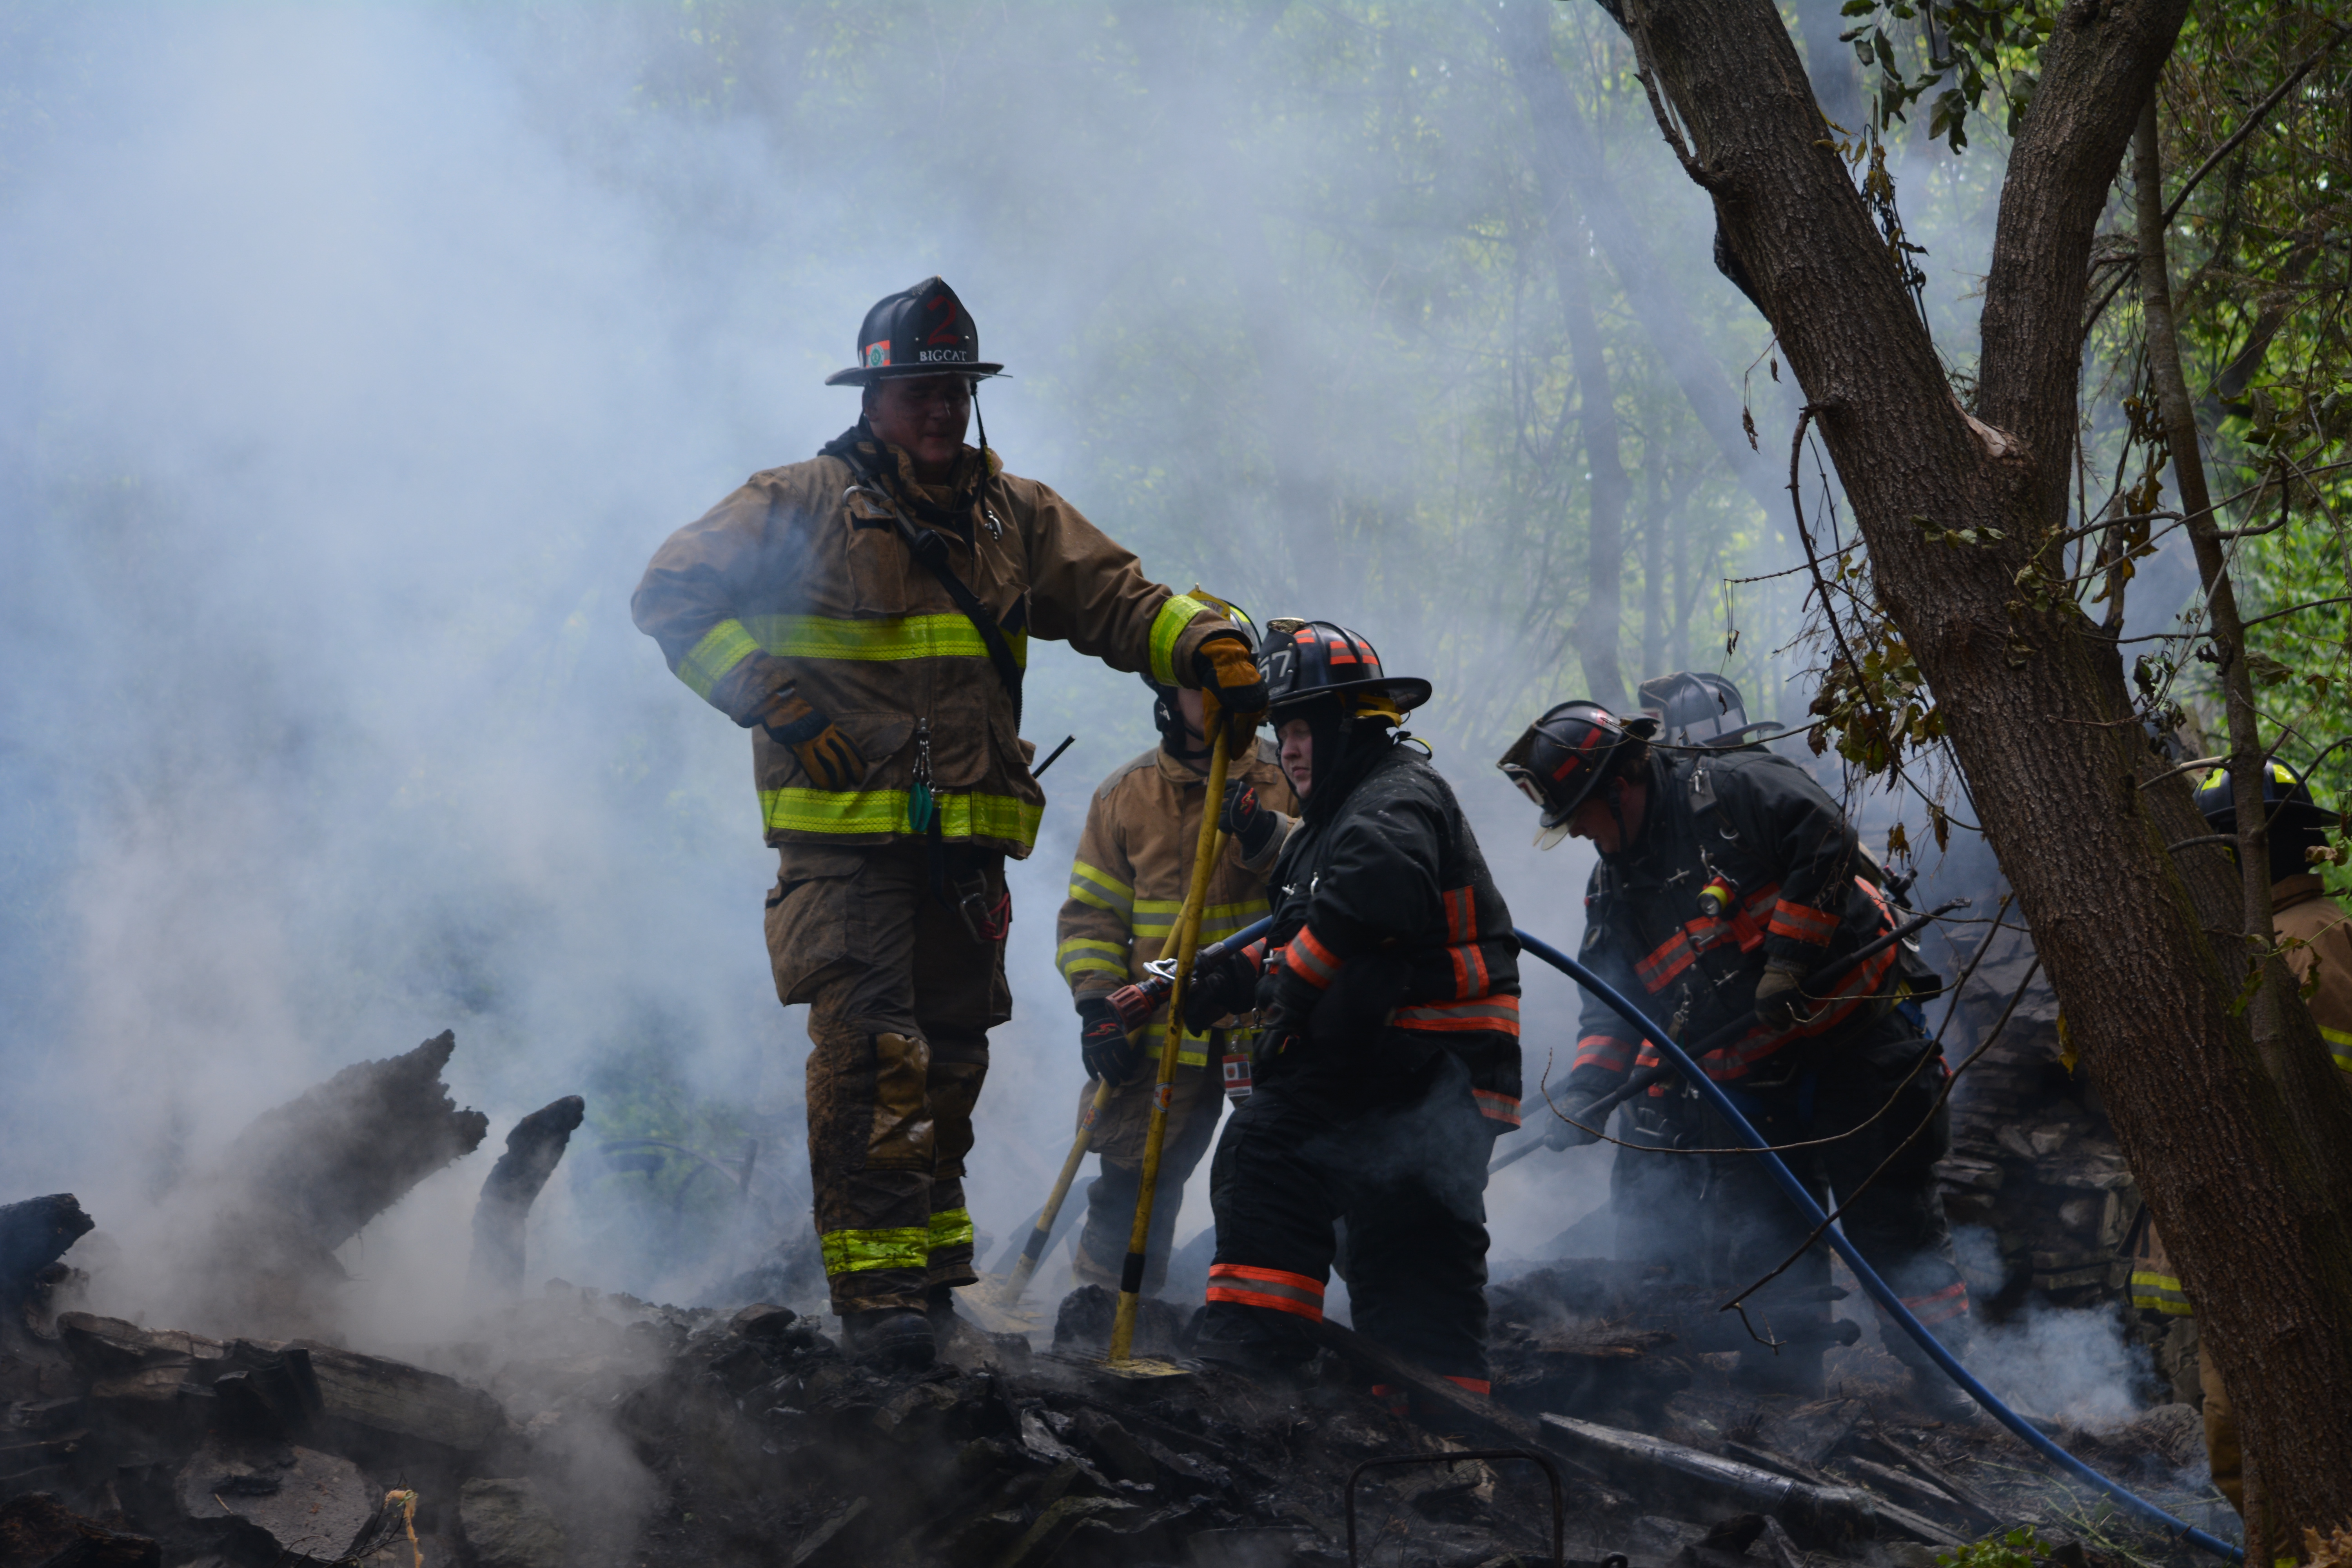 06-22-18  Response - Mutual Aid Barn Fire